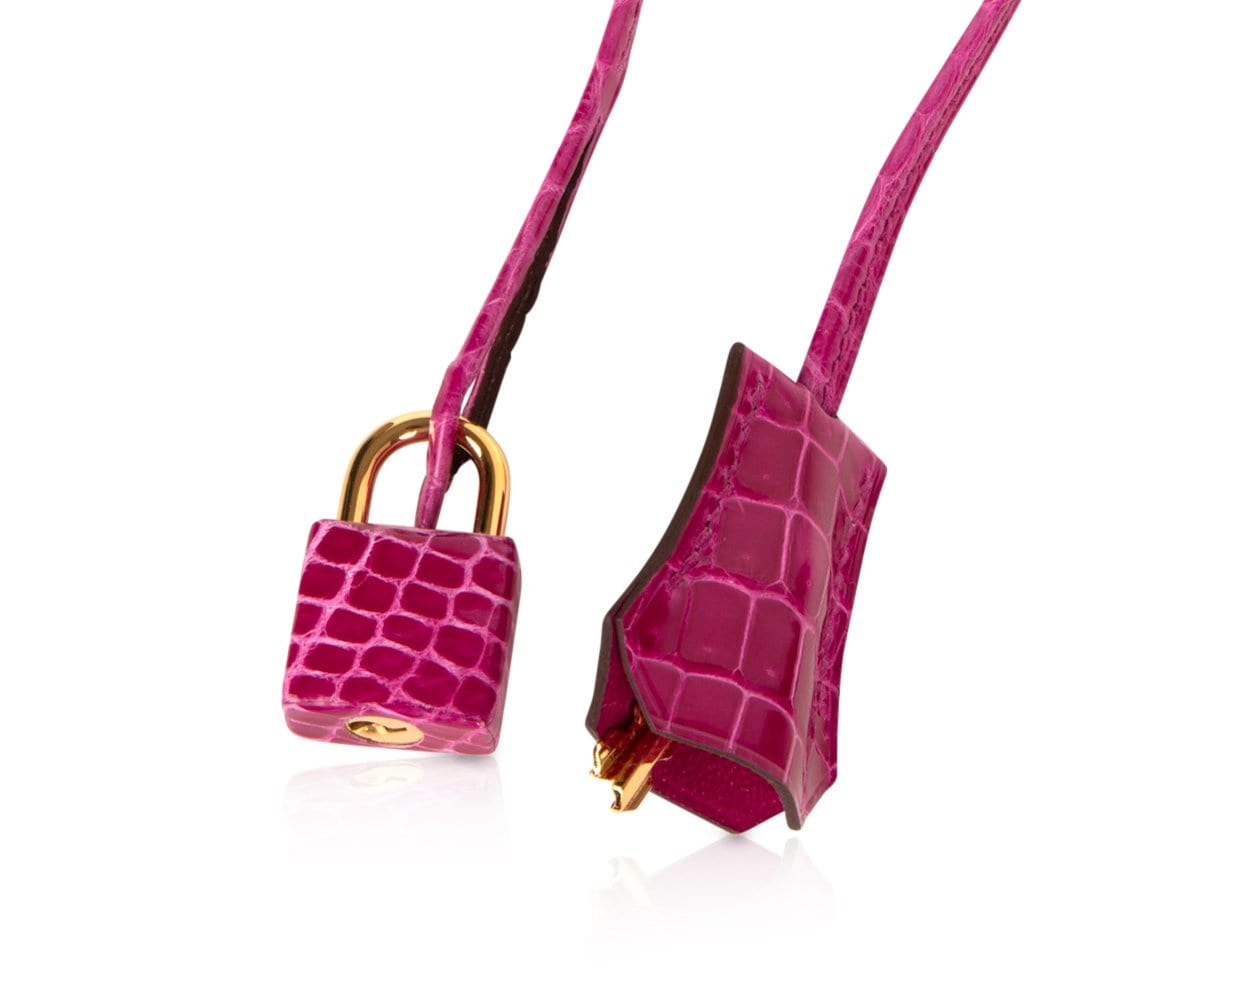 Hermes Rose Scheherazade Hot Pink GHW Crocodile Birkin 30 Handbag